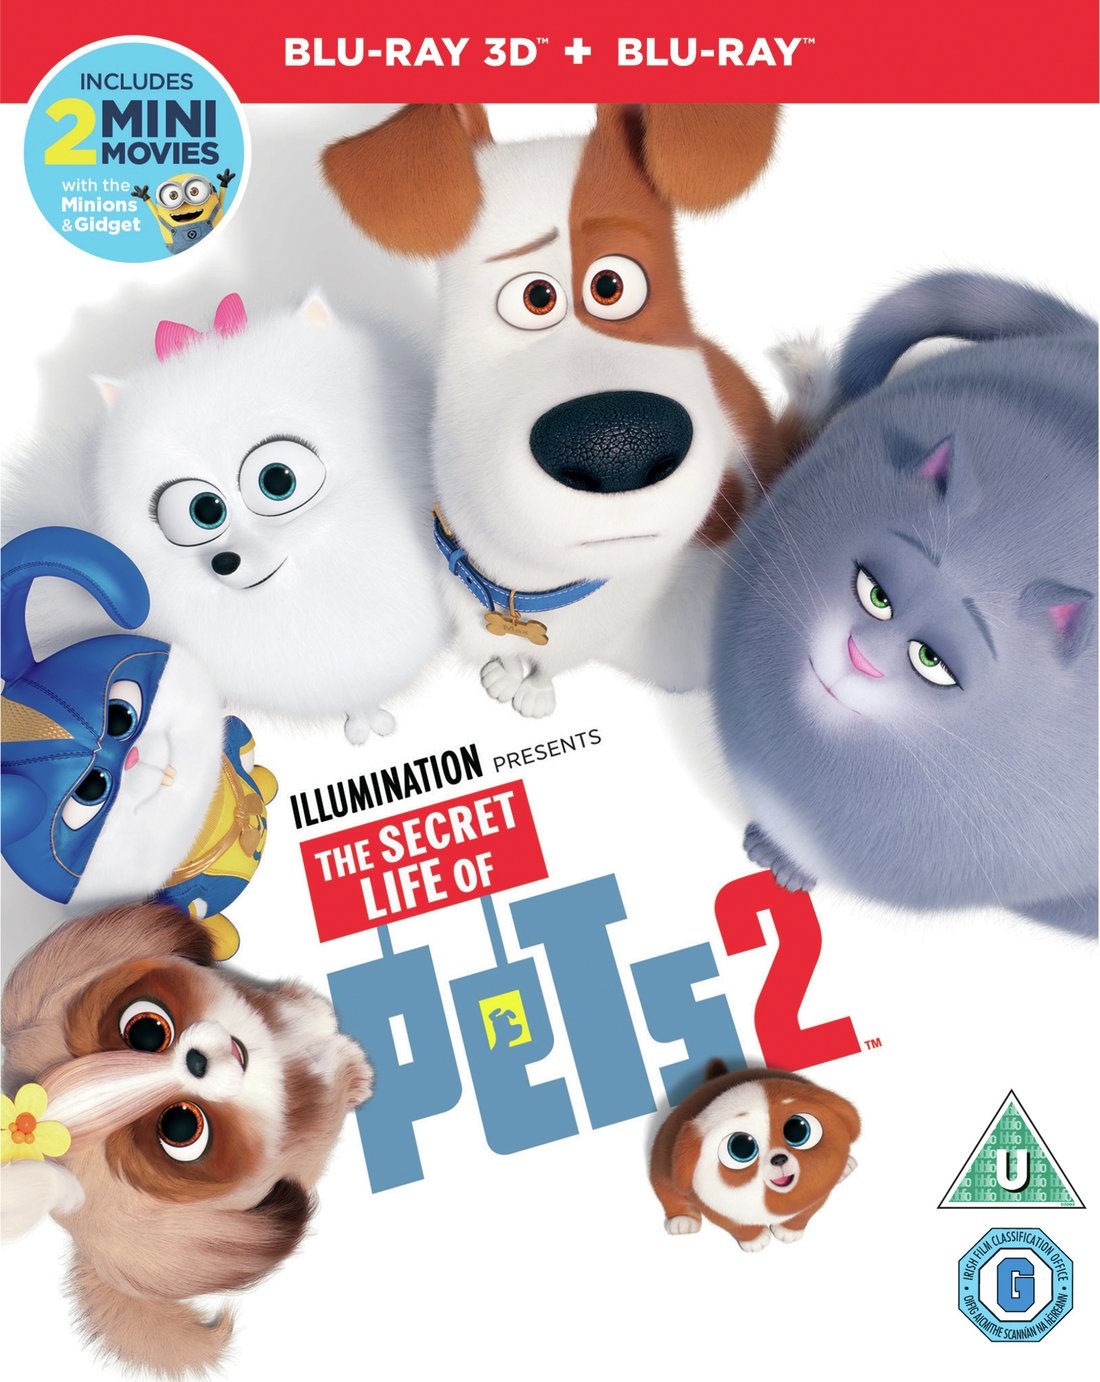 The Secret Life of Pets 2 Blu-ray